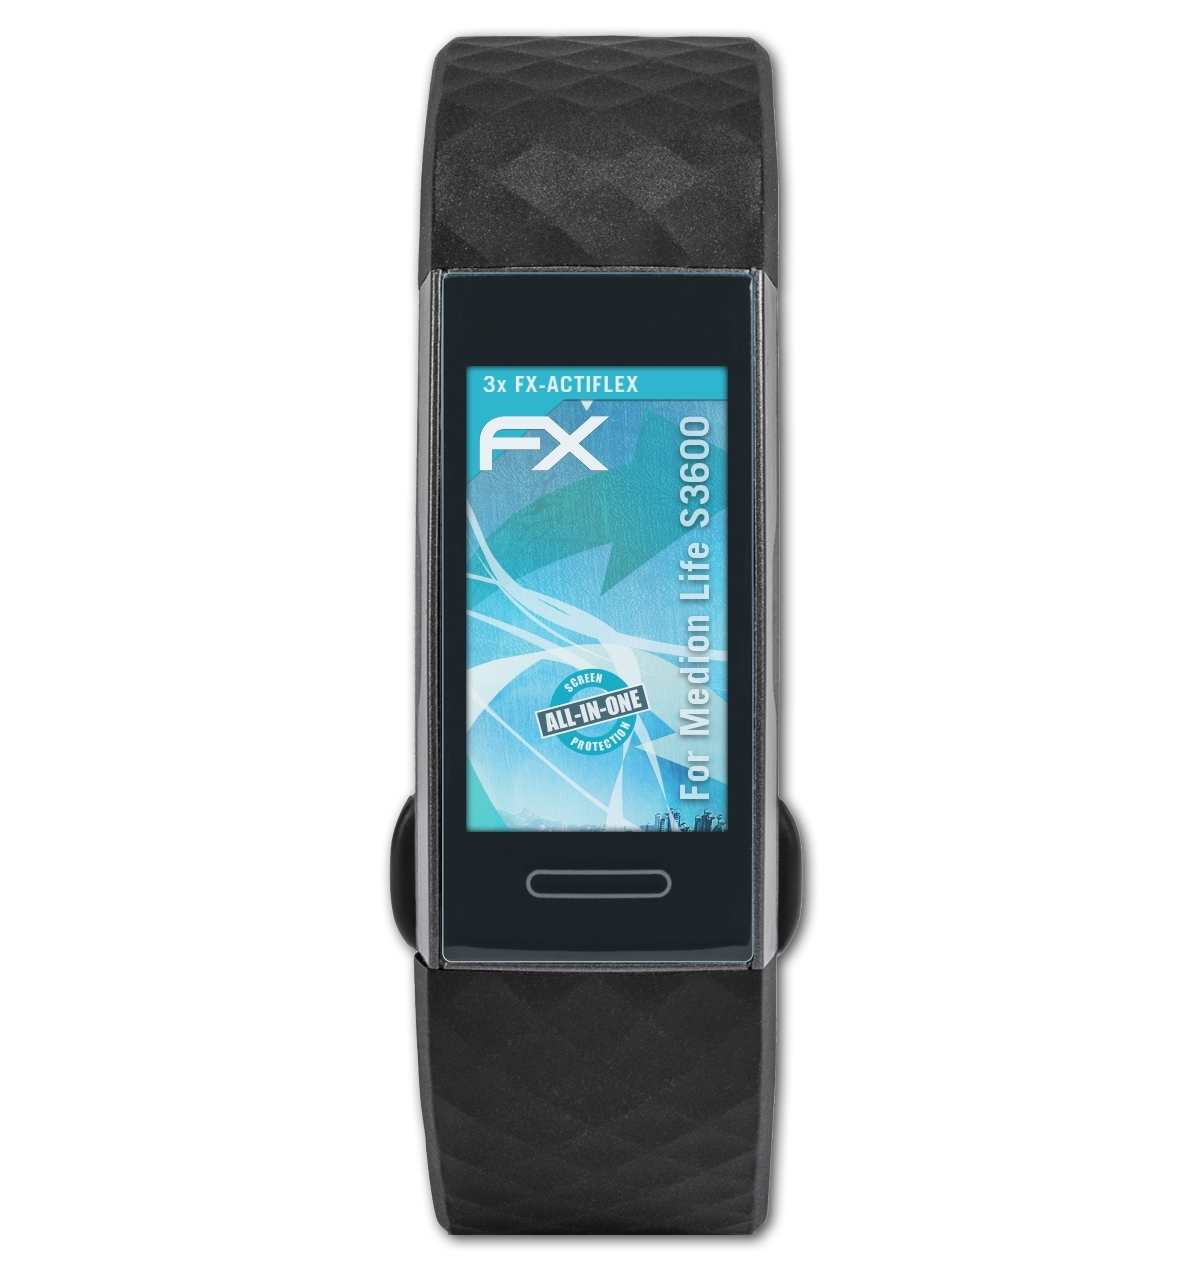 Life FX-ActiFleX ATFOLIX Medion S3600) Displayschutz(für 3x